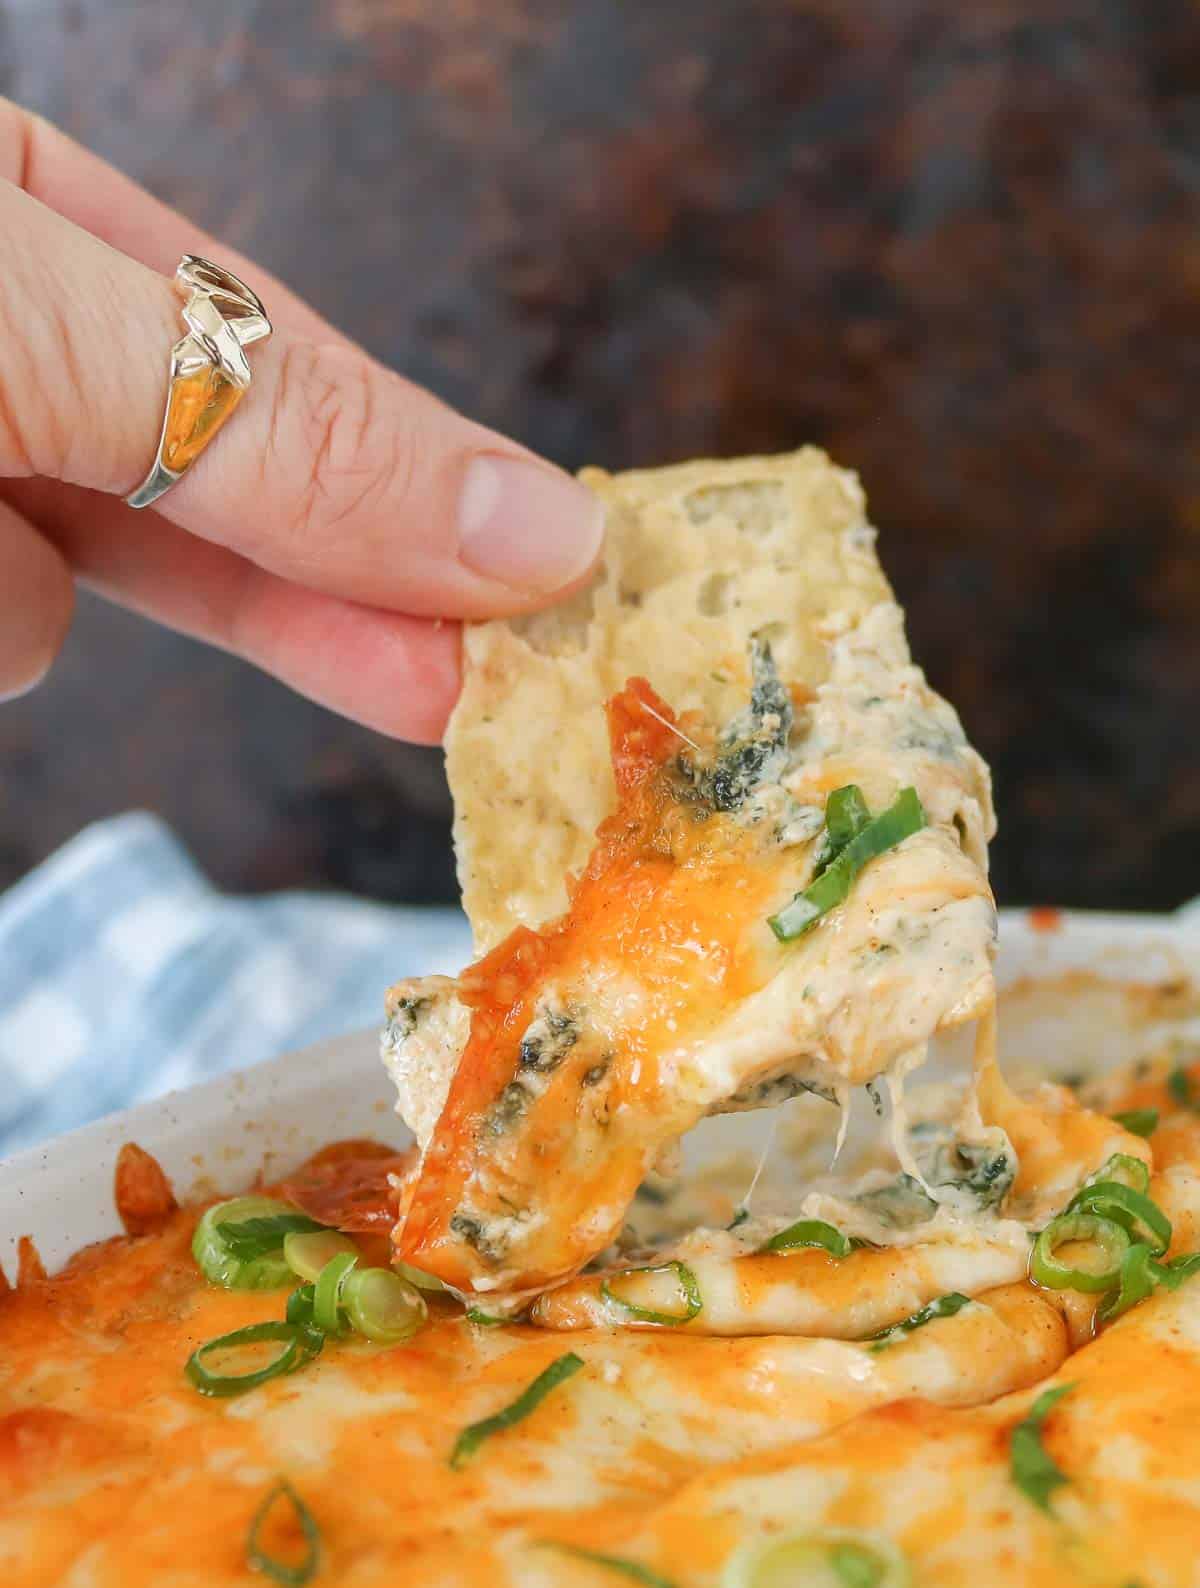 Hand dipping a tortilla chip into cheesy crab dip.